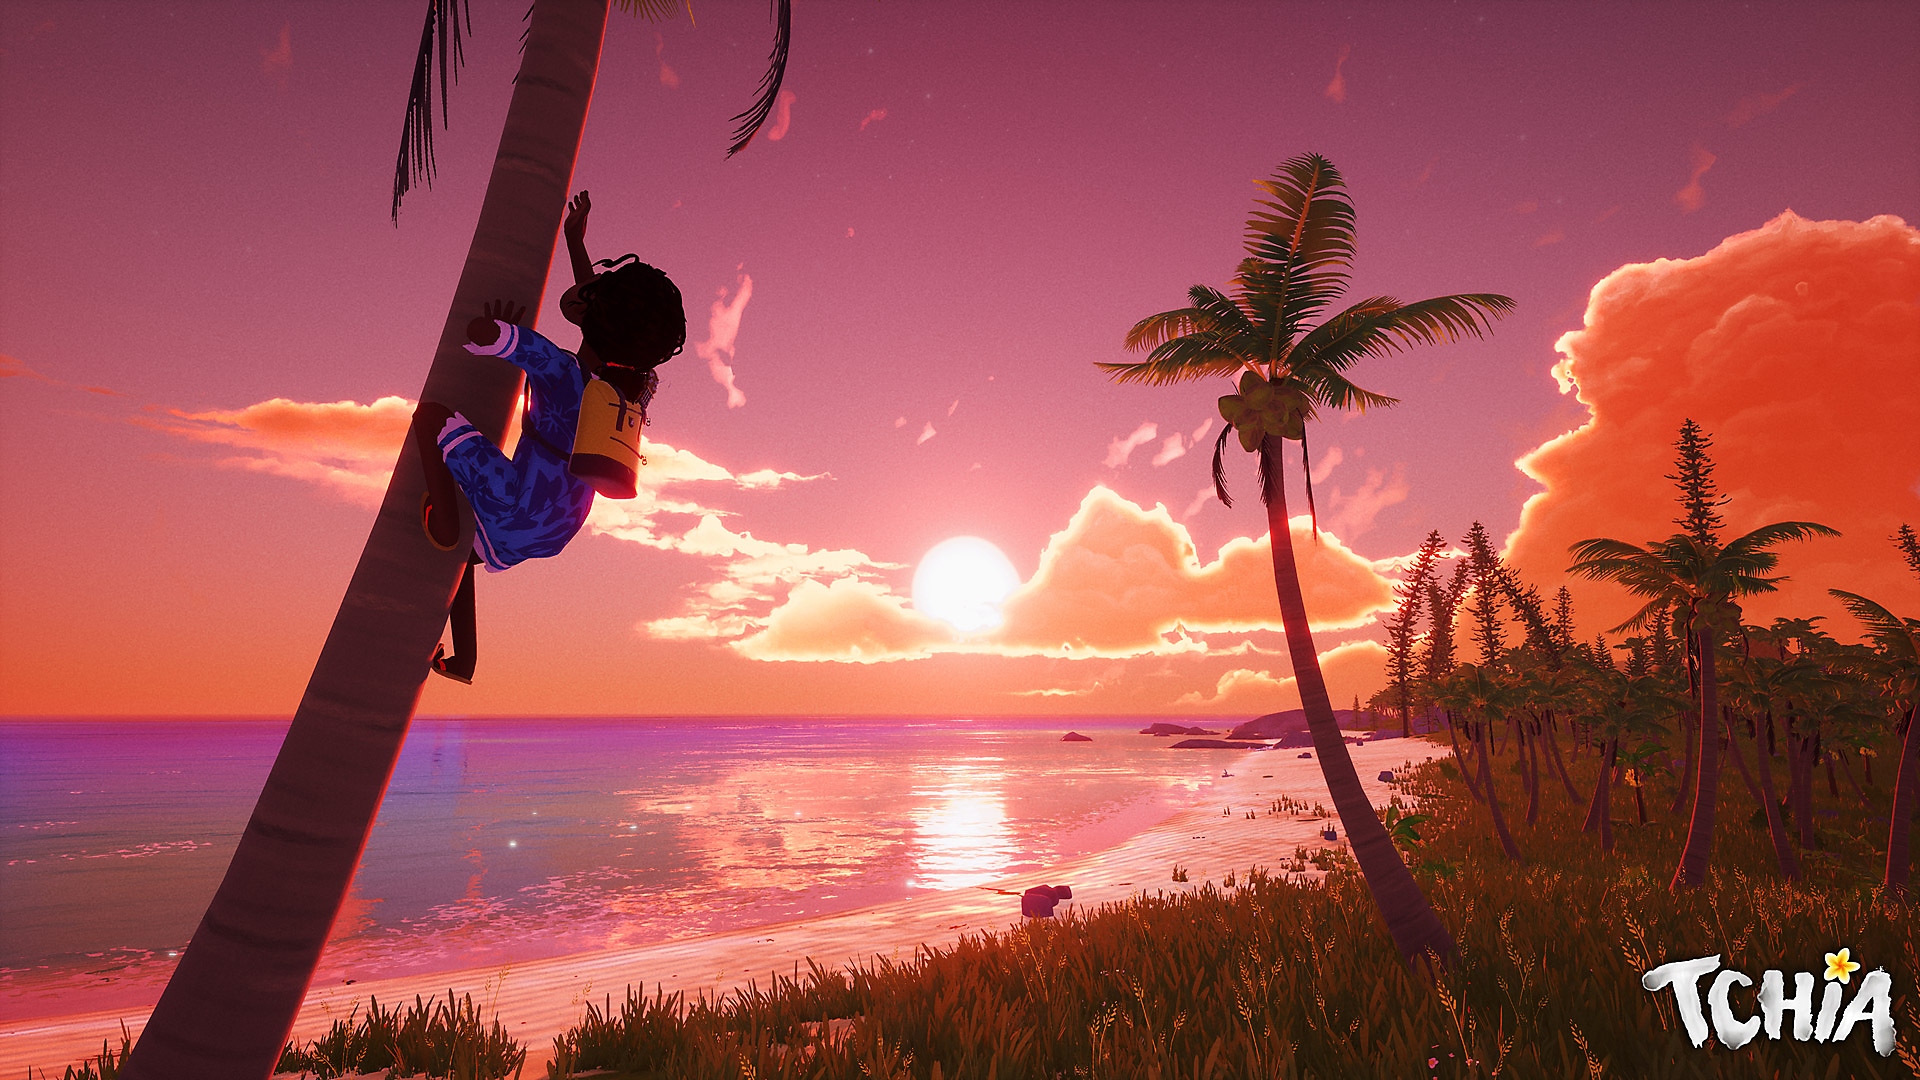 《Tchia》截屏展示了主角迎着落日美景爬上一棵树